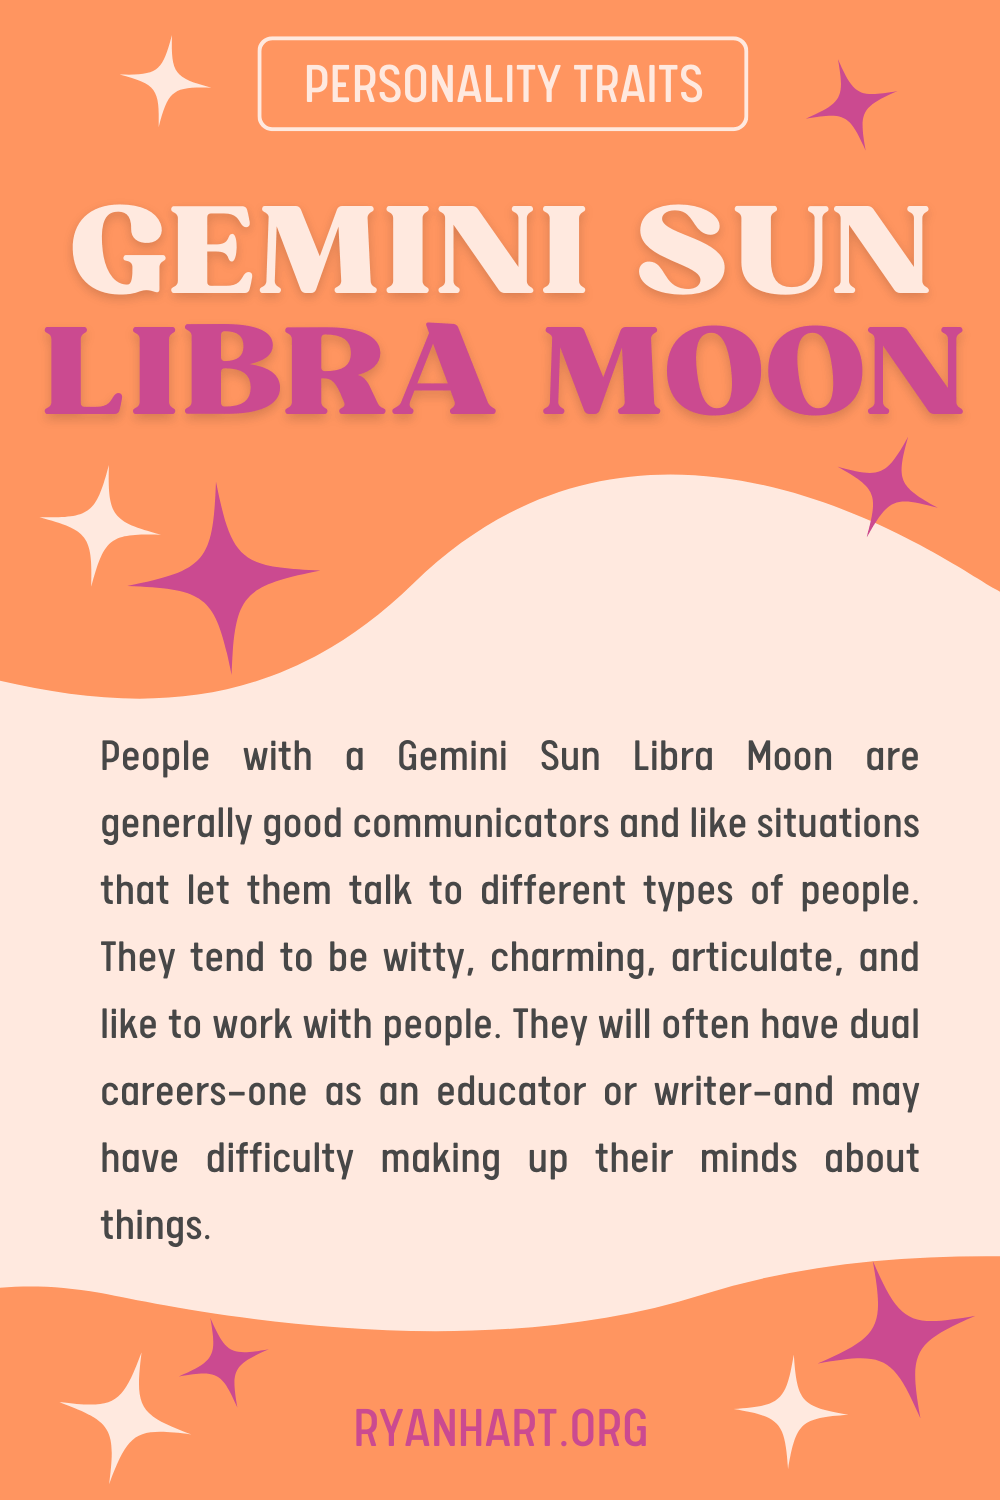 Gemini Sun Libra Moon Description